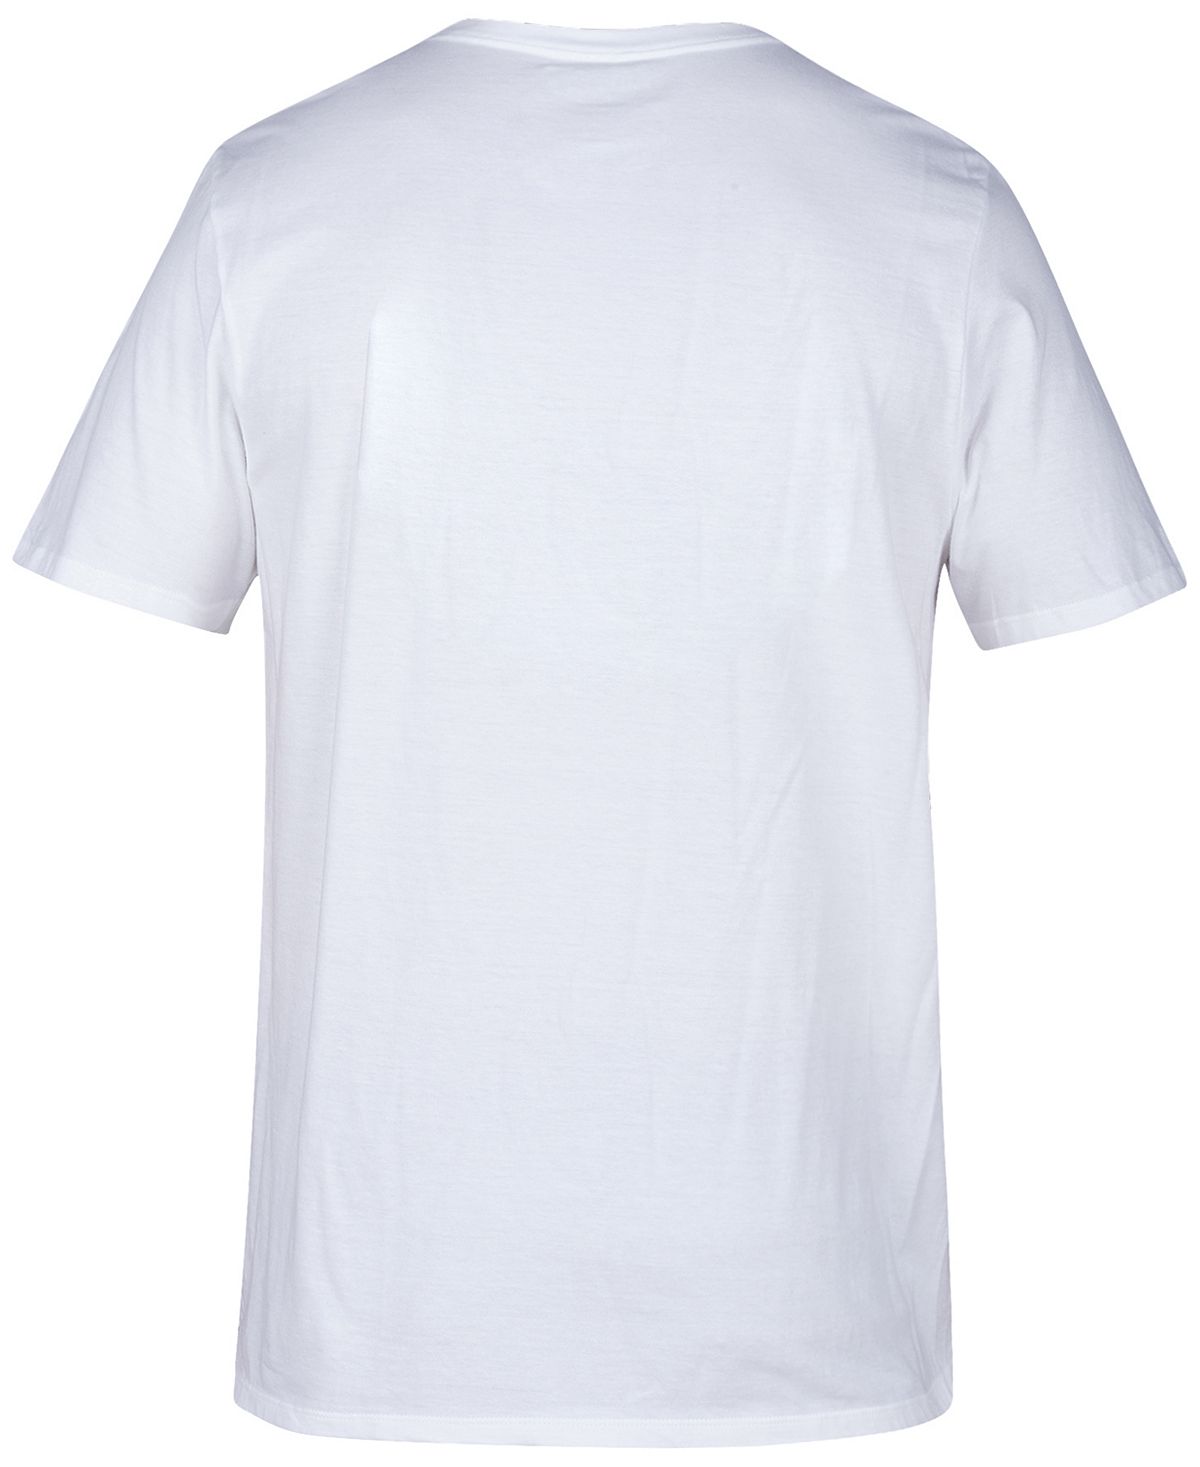 Hurley Prism Burt Enzyme Graphic T-shirt White/white